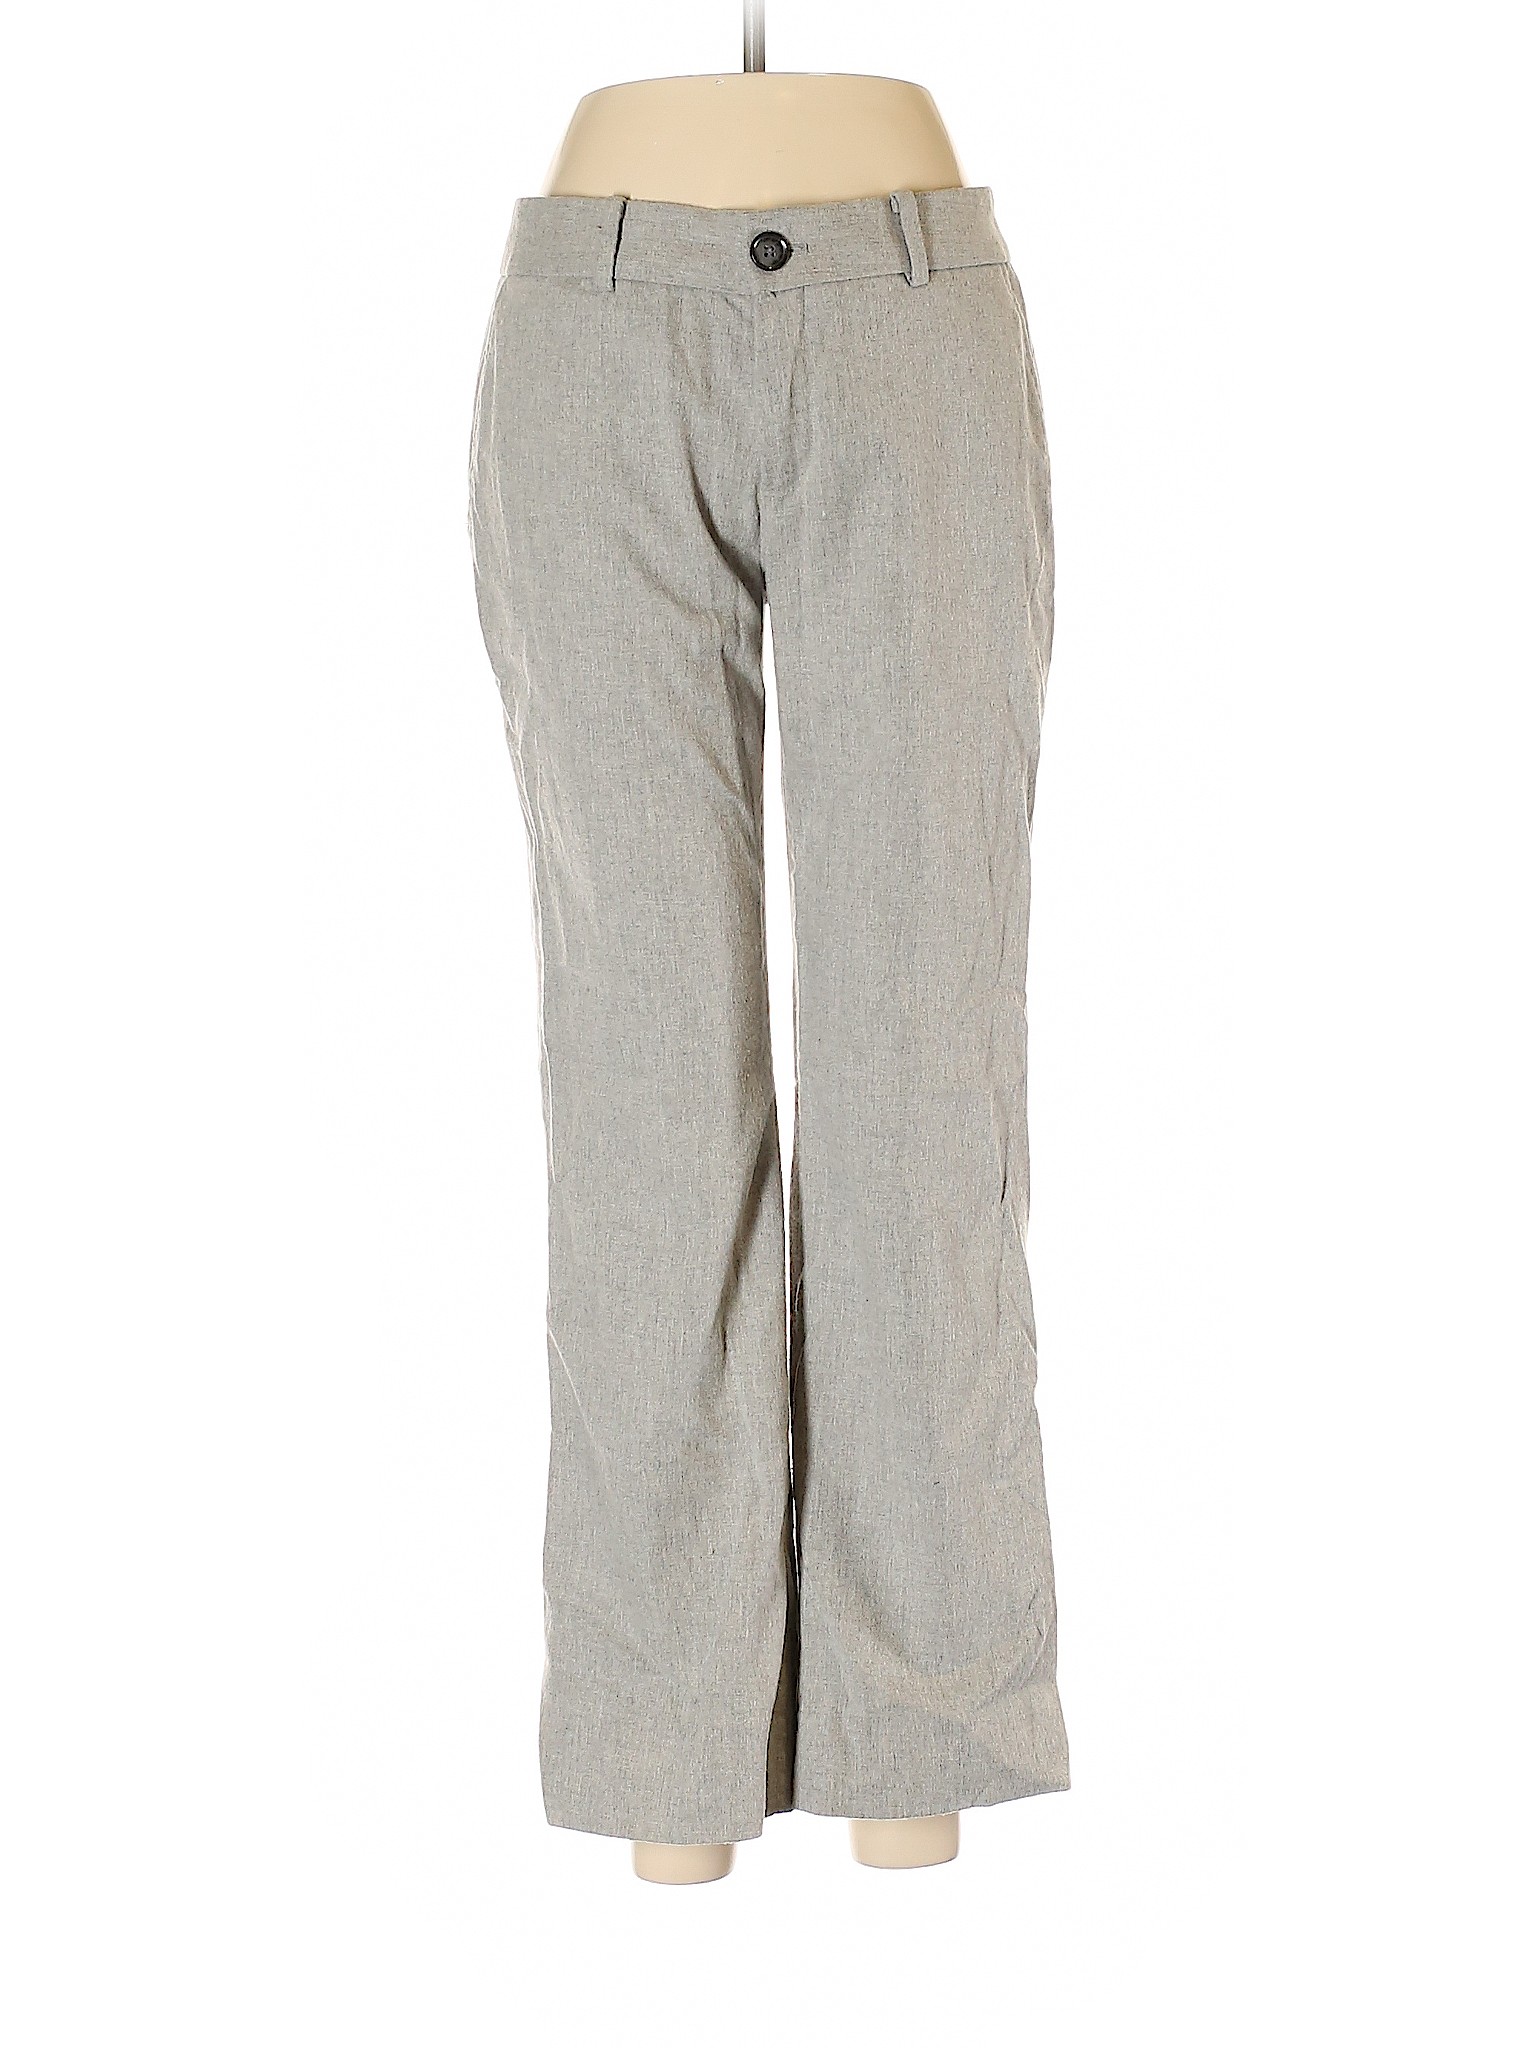 Banana Republic Women Gray Casual Pants 6 Petites | eBay